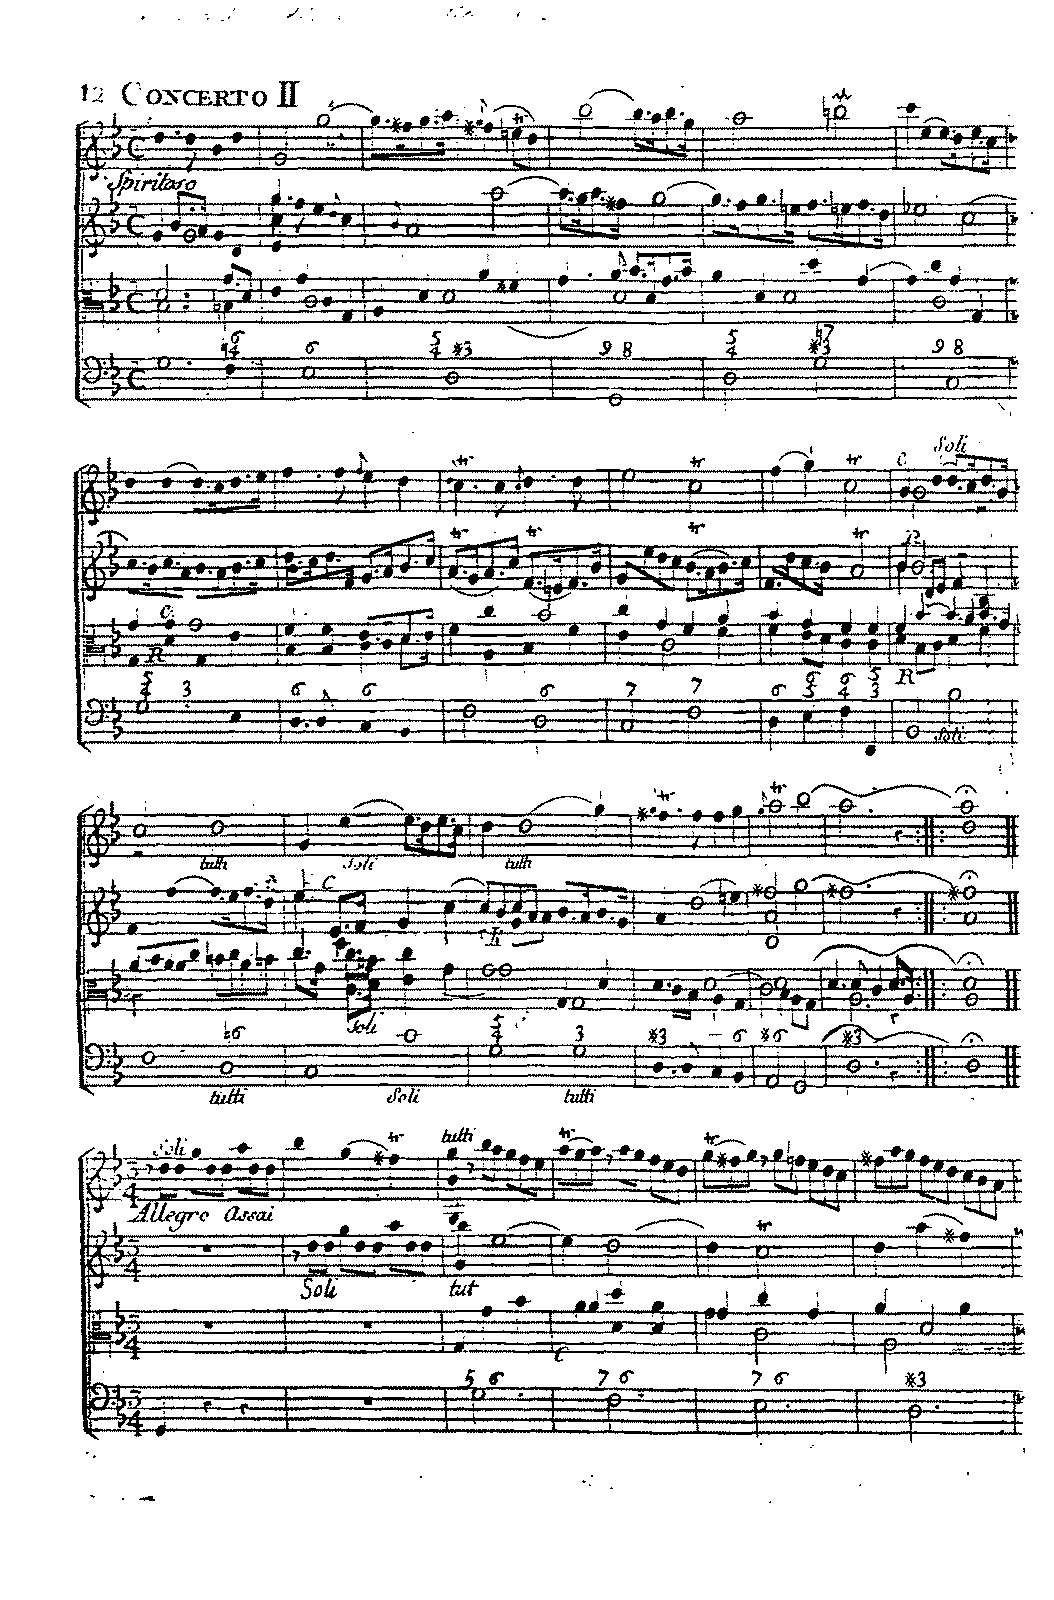 Concerto Grosso in G minor, H.80 (Geminiani, Francesco) - IMSLP